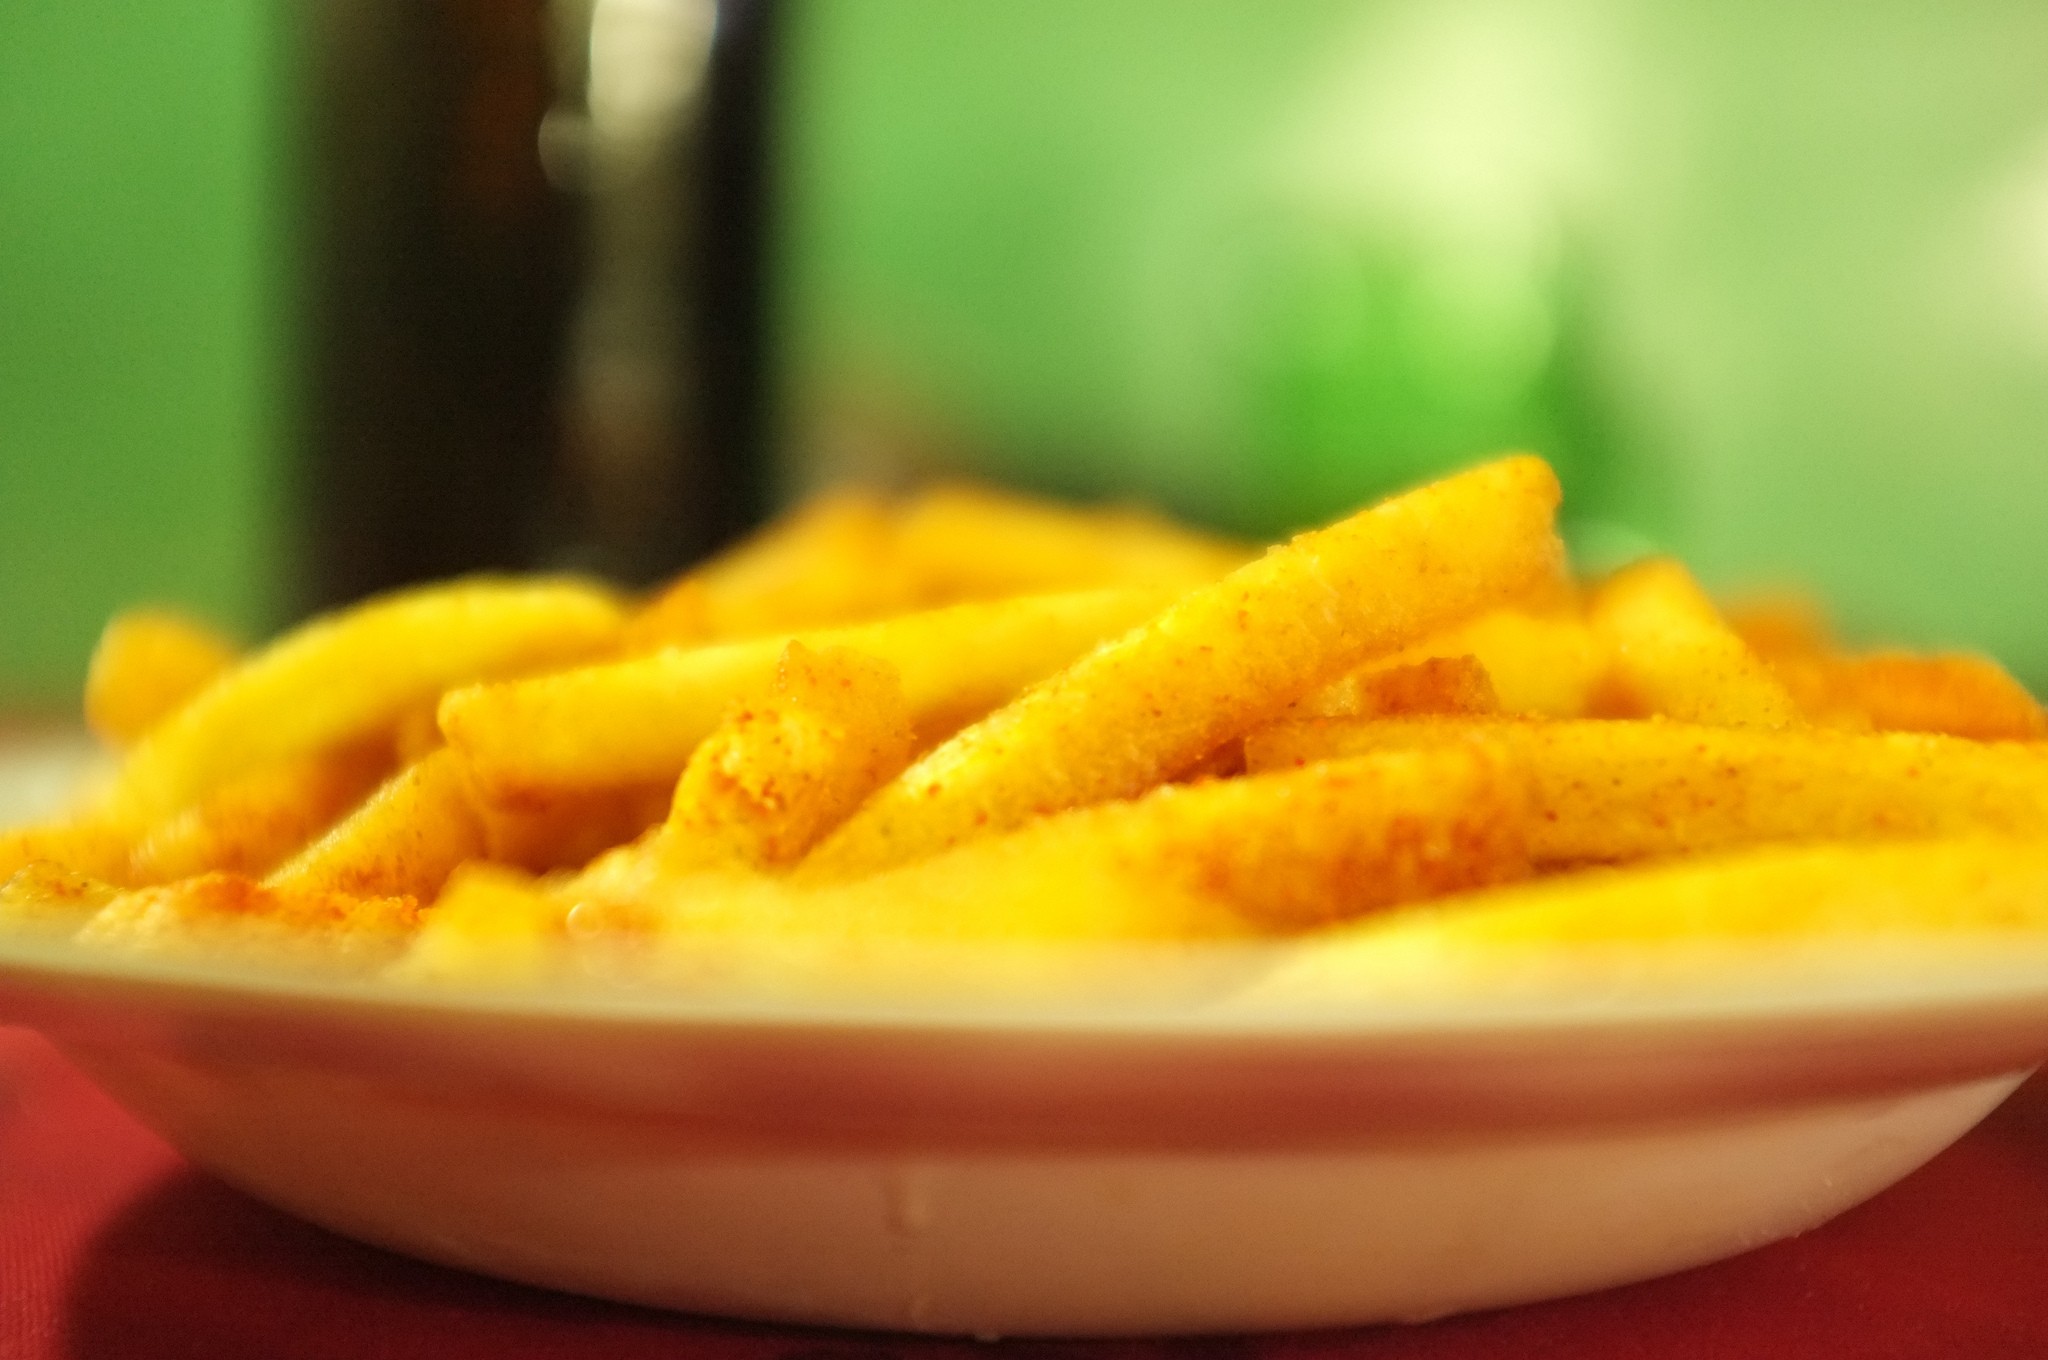 batata frita após um dia estressante? (Foto: Indi Samarajiva / flickr/ creative commons)